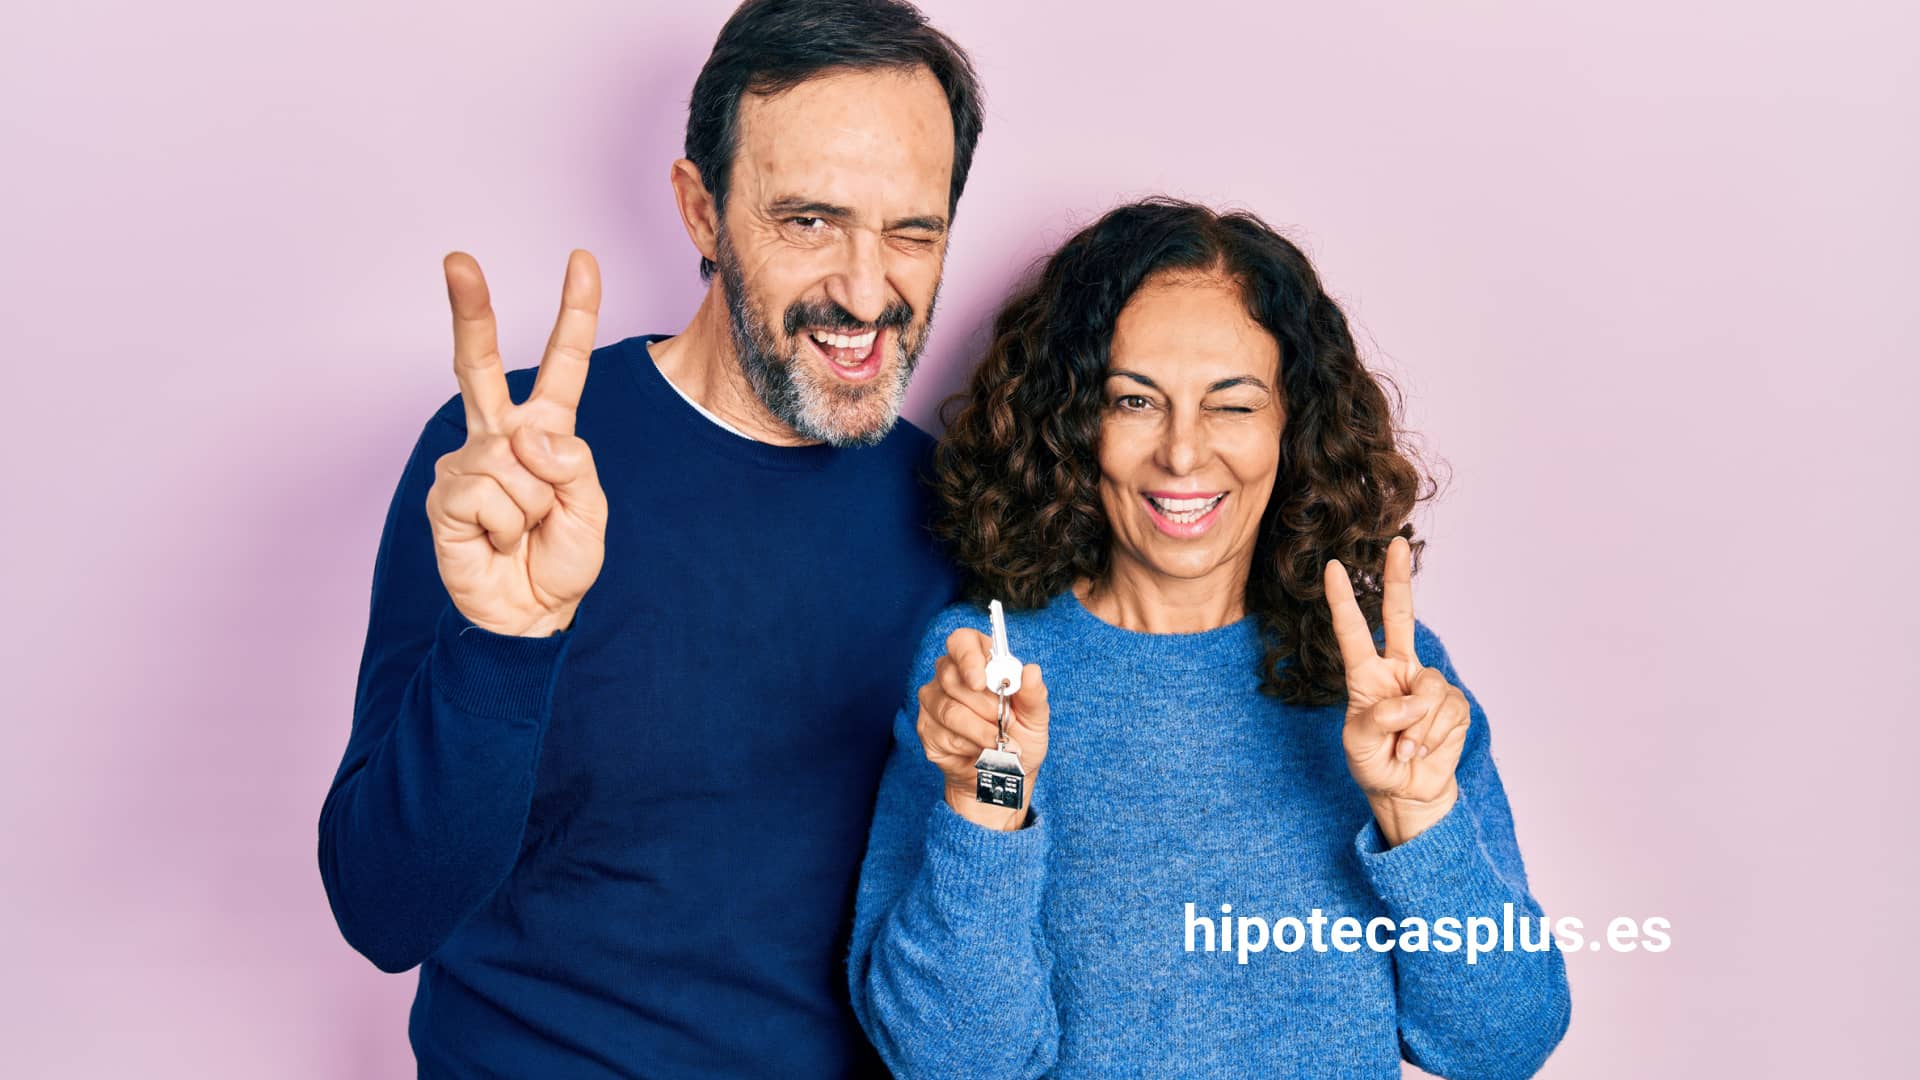 https://www.hipotecasplus.es/wp-content/uploads/HipotecasPLus.jpg